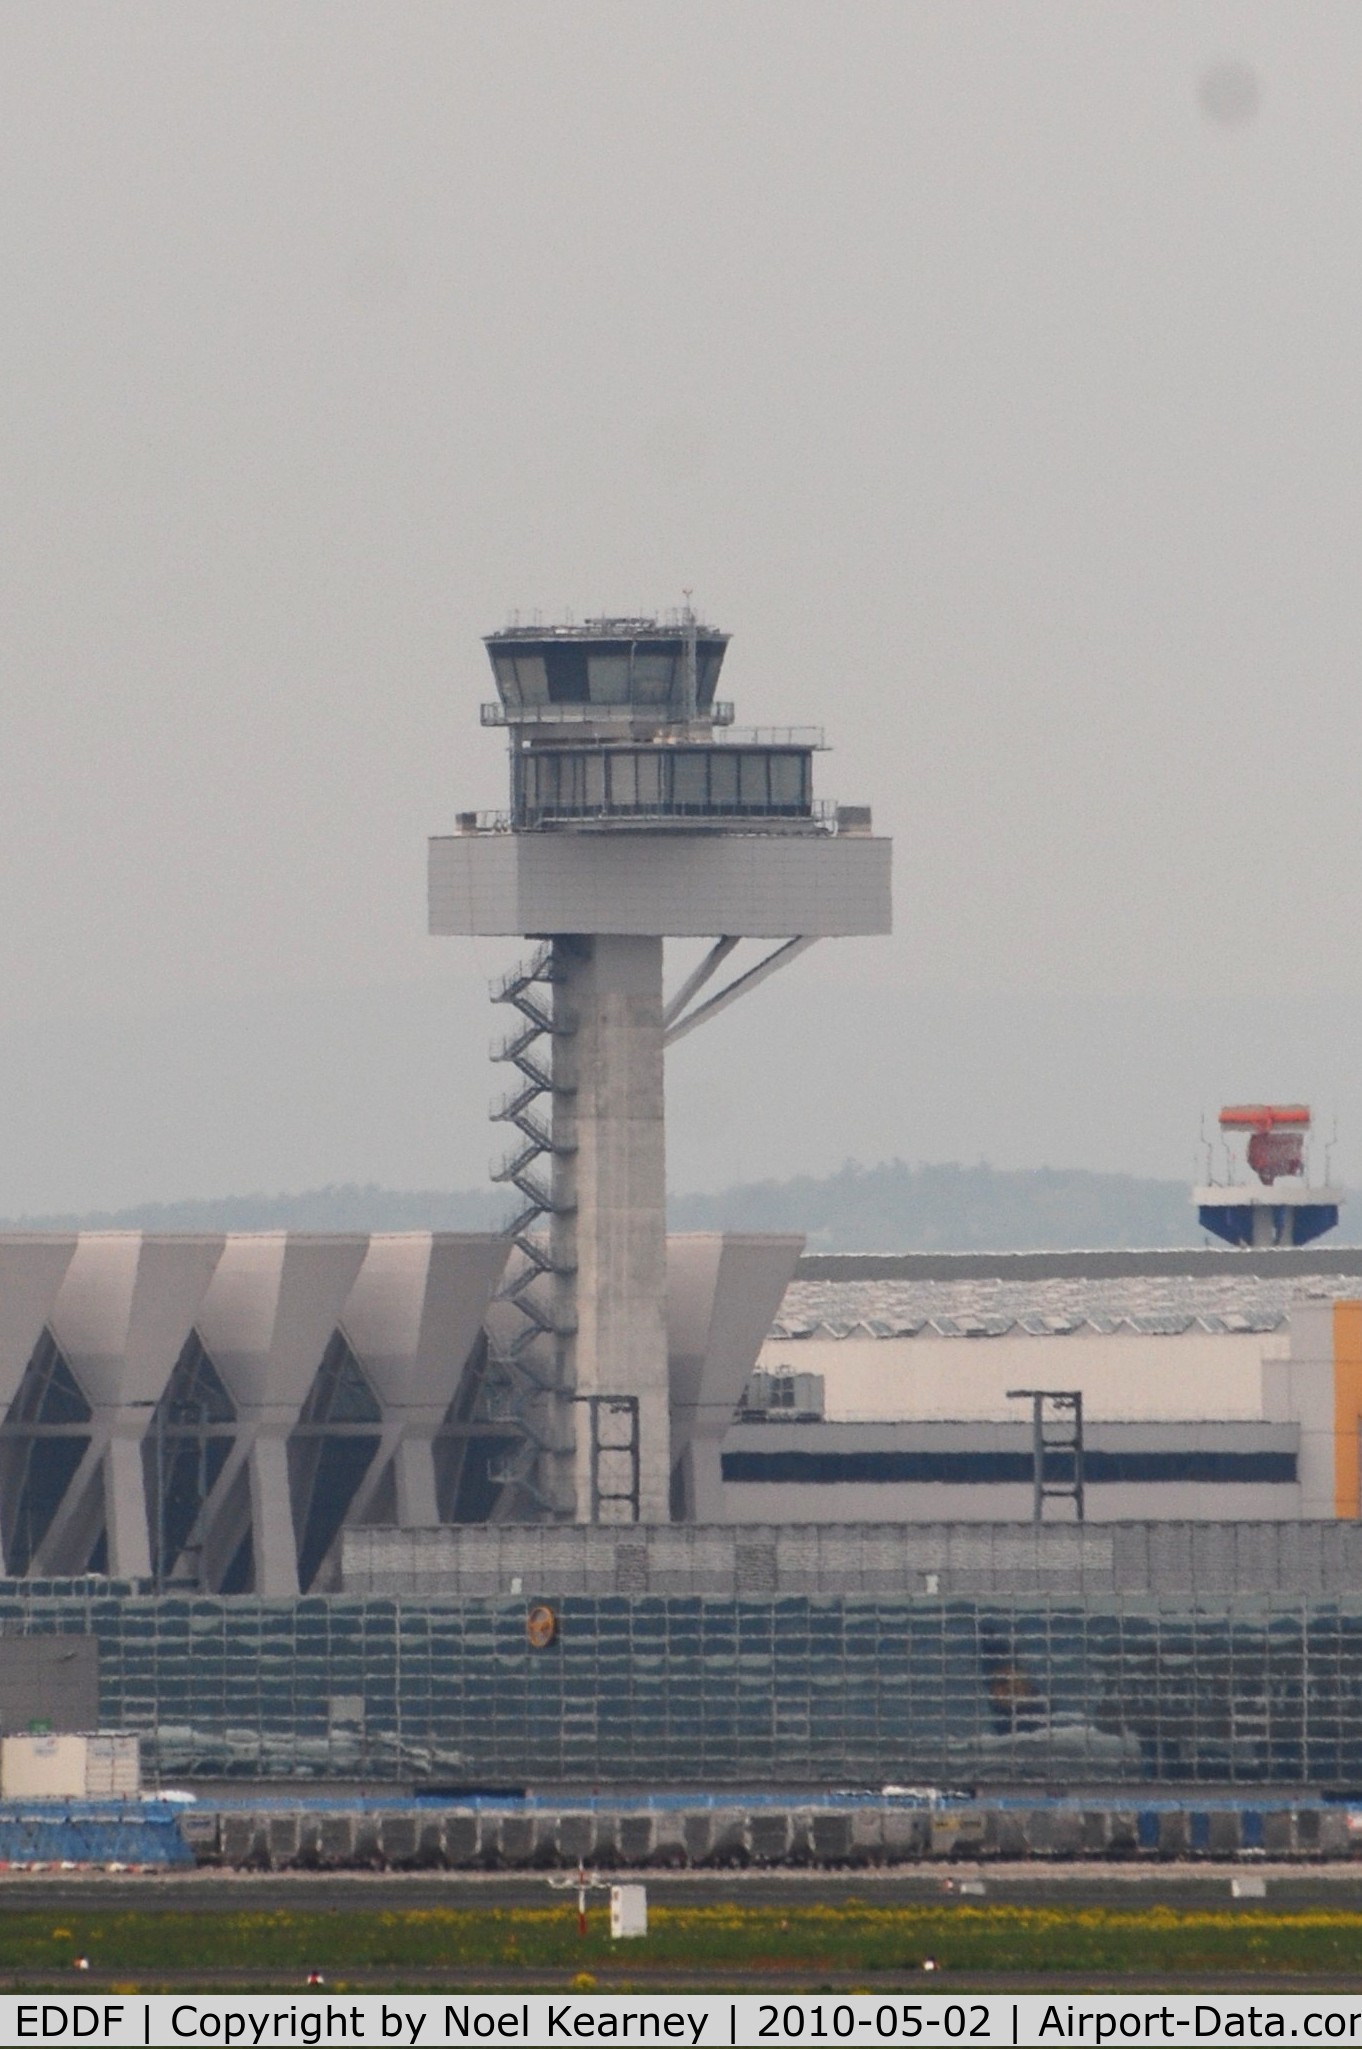 Frankfurt International Airport, Frankfurt am Main Germany (EDDF) - One of many control towers at EDDF.